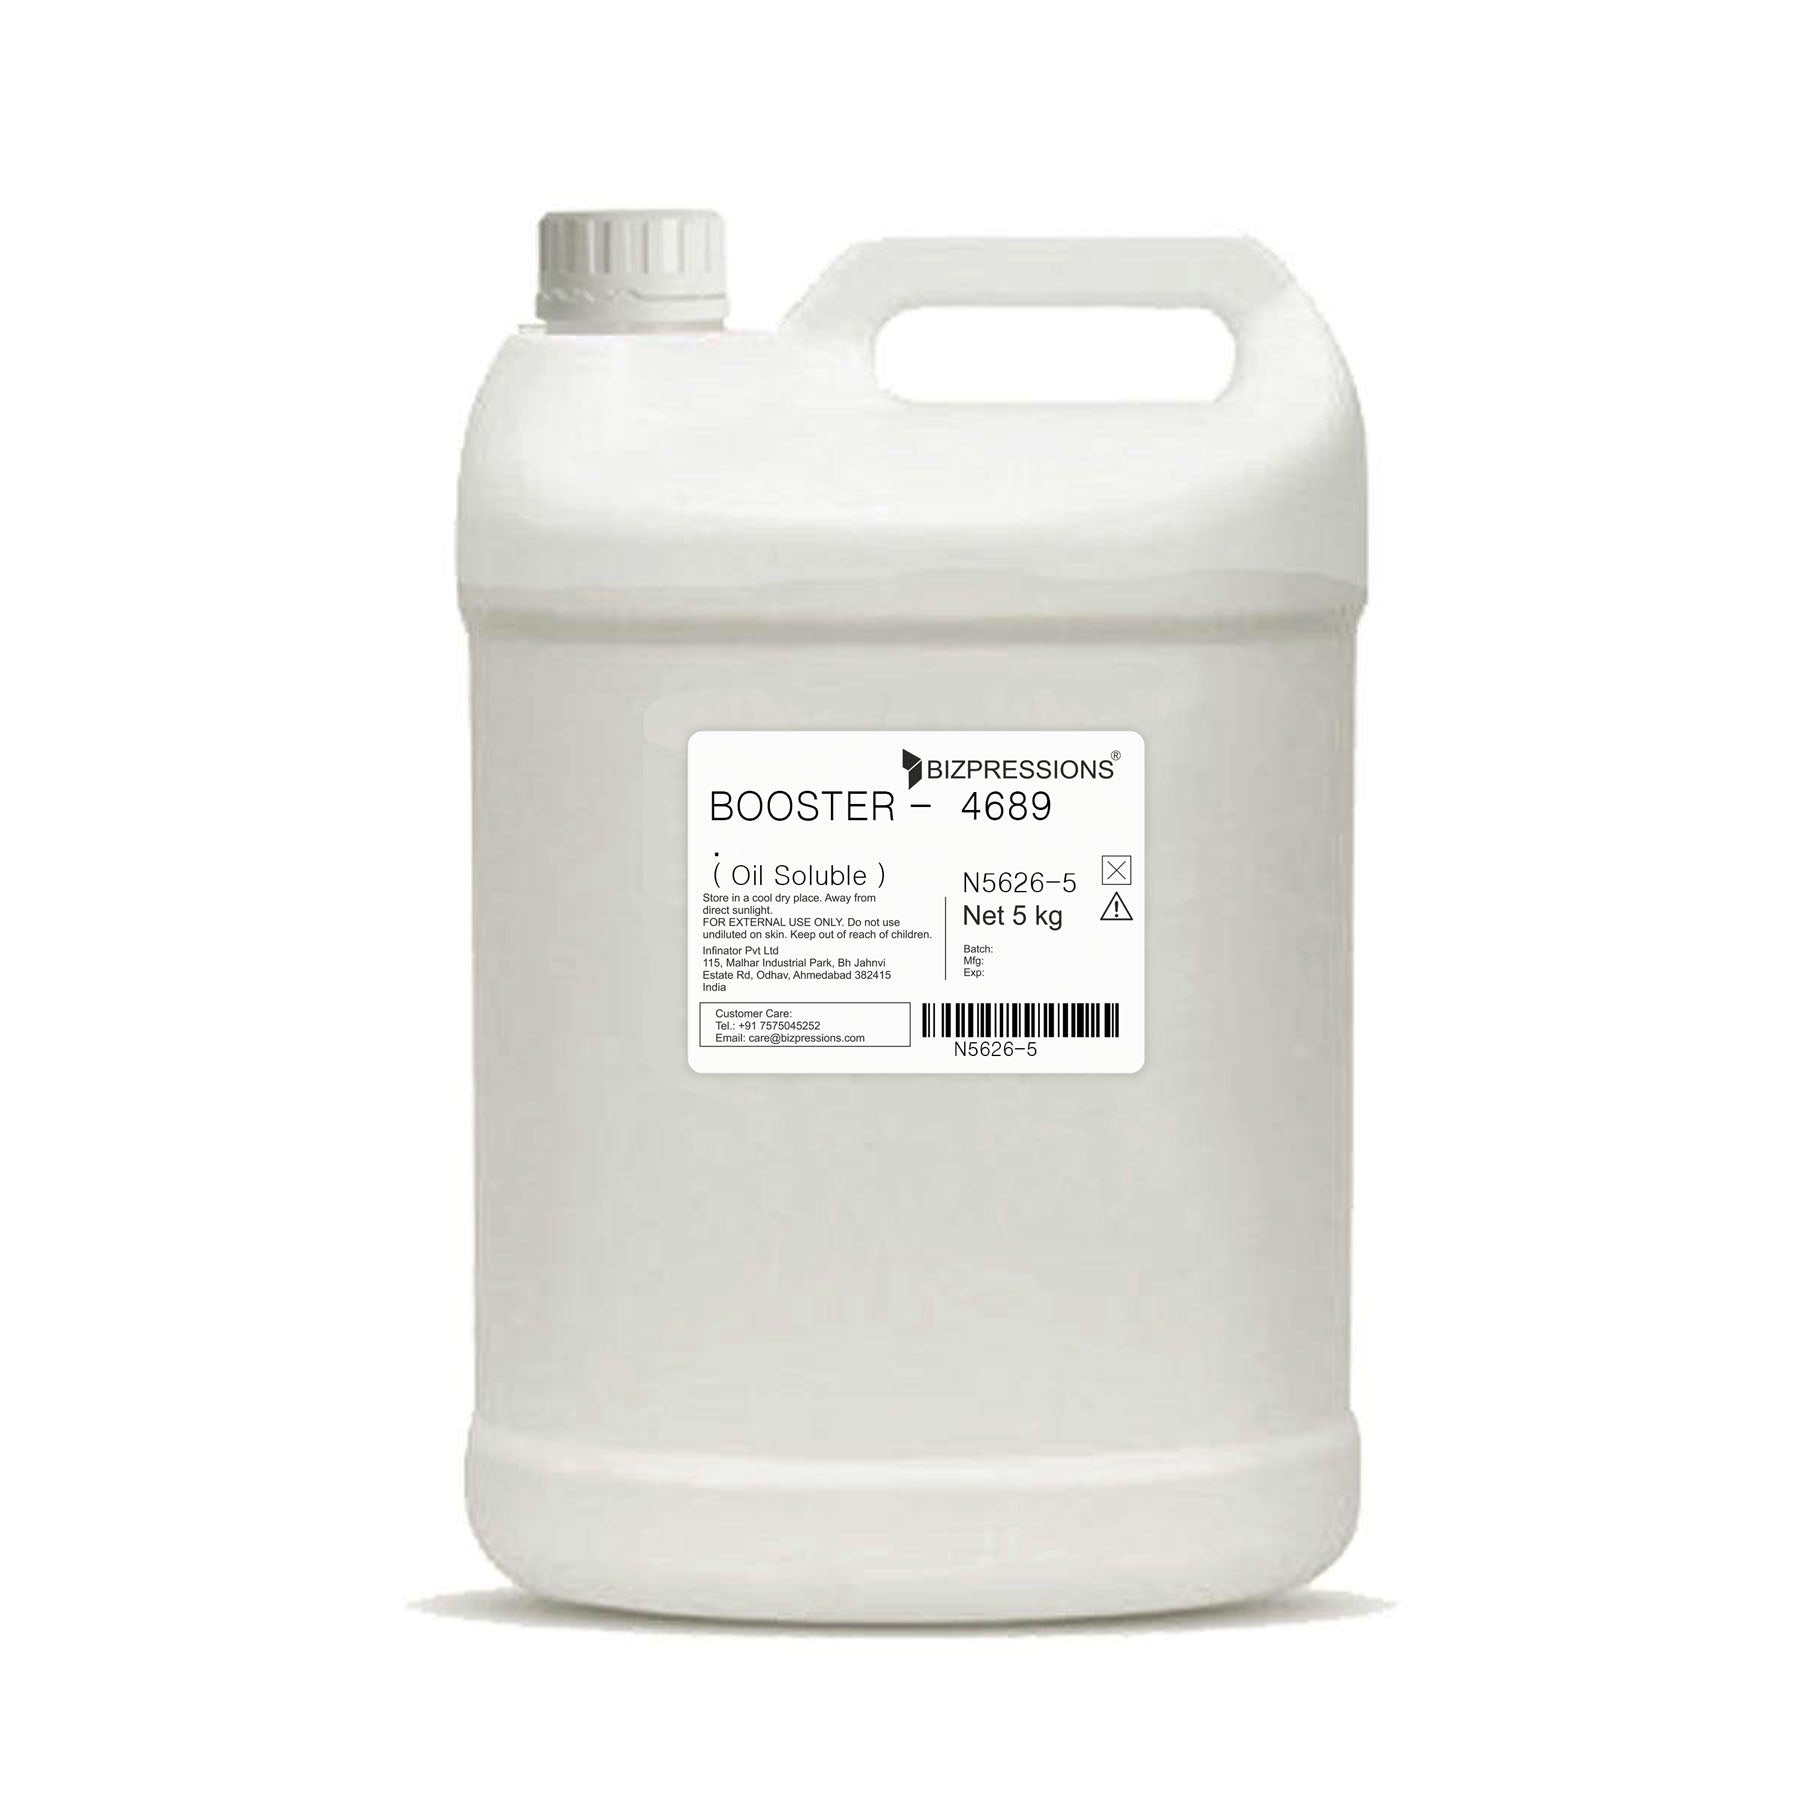 BOOSTER - 4689 - Fragrance ( Oil Soluble ) - 5 kg